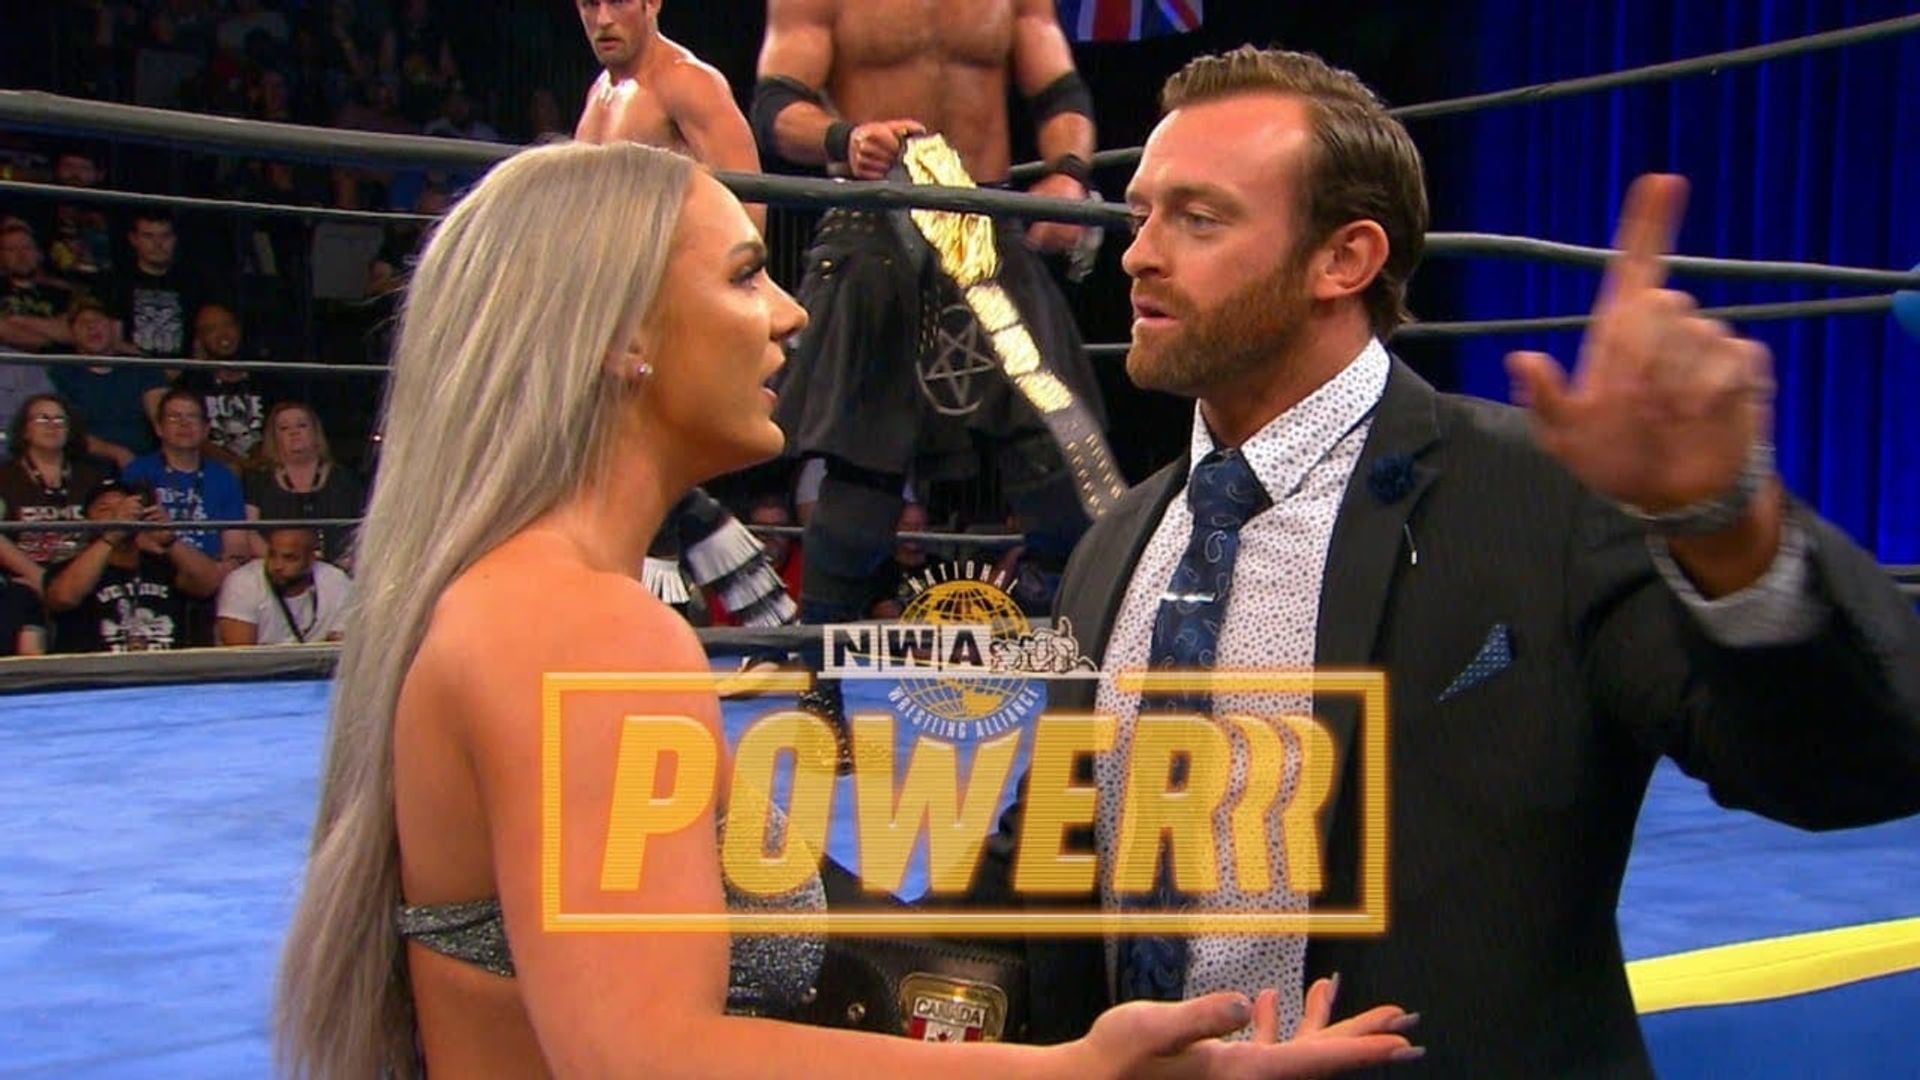 NWA Powerrr background